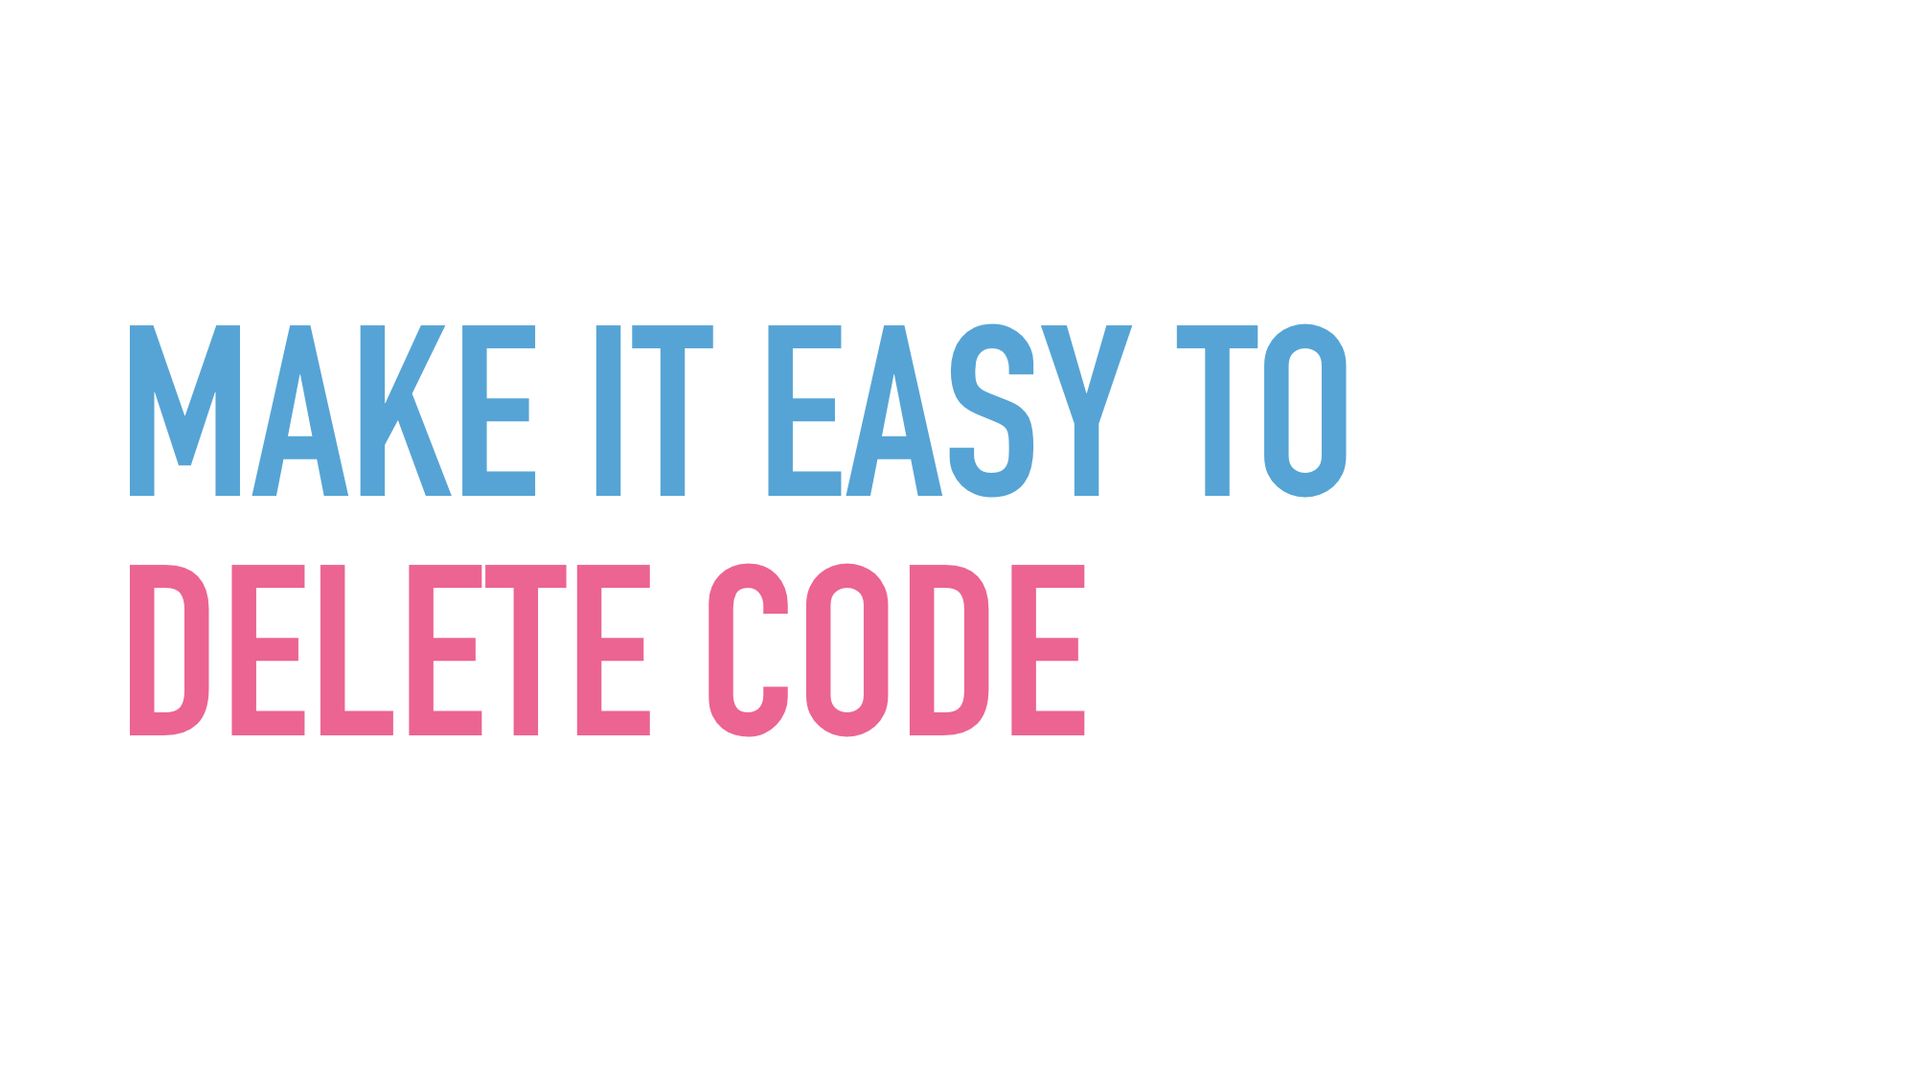 Slide text: Make it easy to delete code.